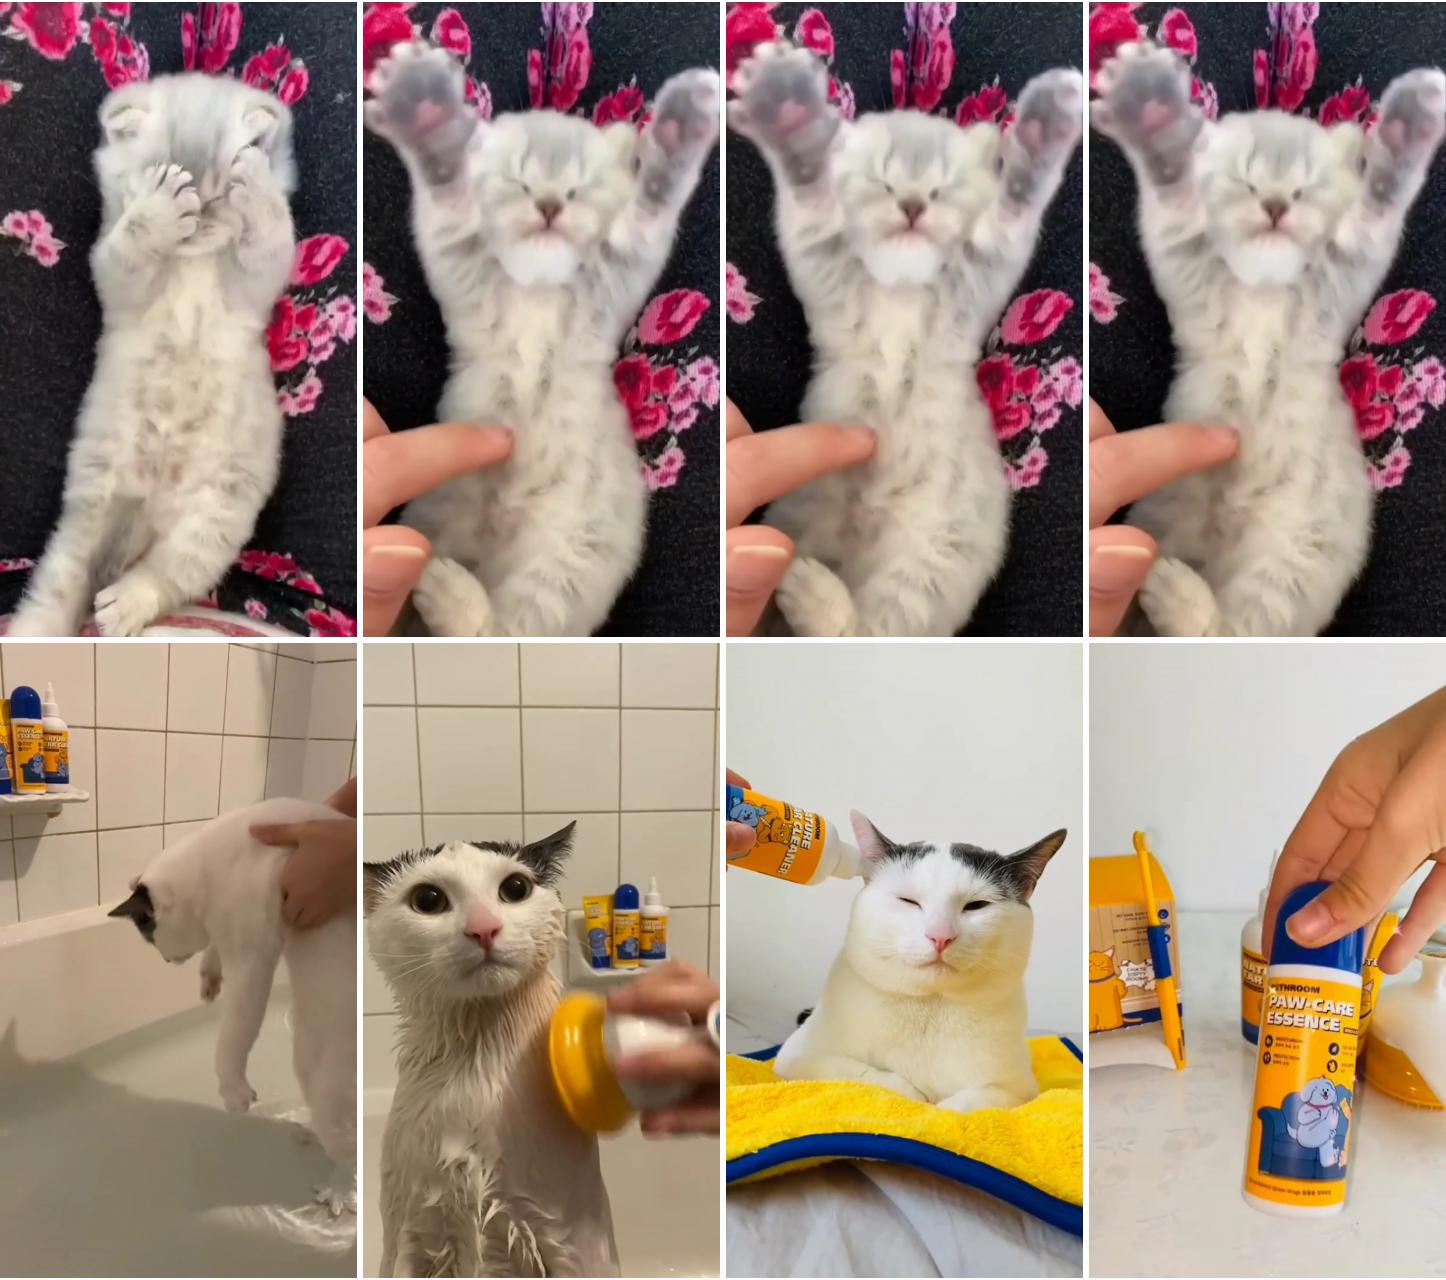 Cat grooming; cute little kittens